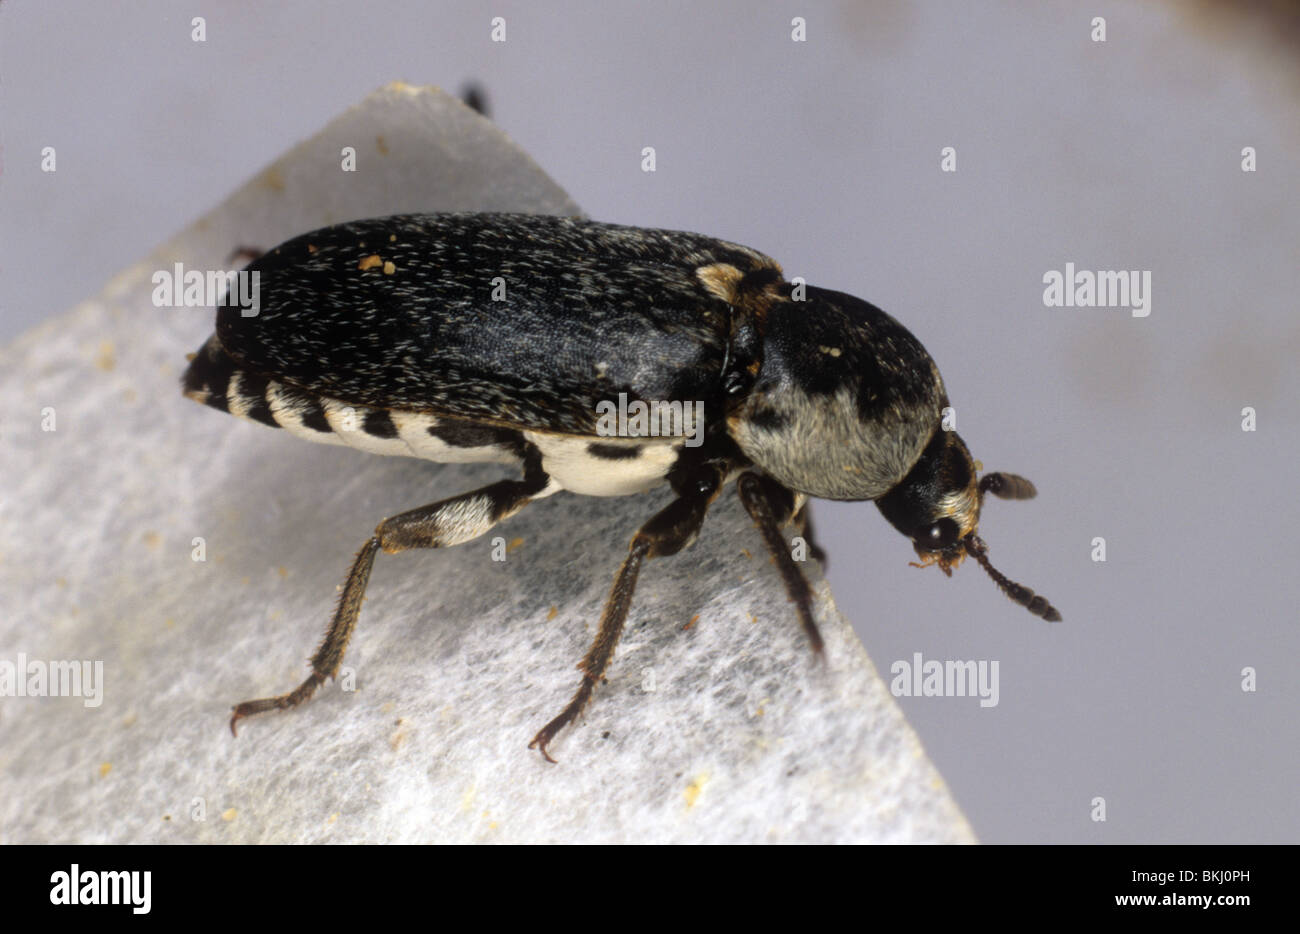 Nascondi beetle (Dermestes frischi) parassiti adulti Foto Stock